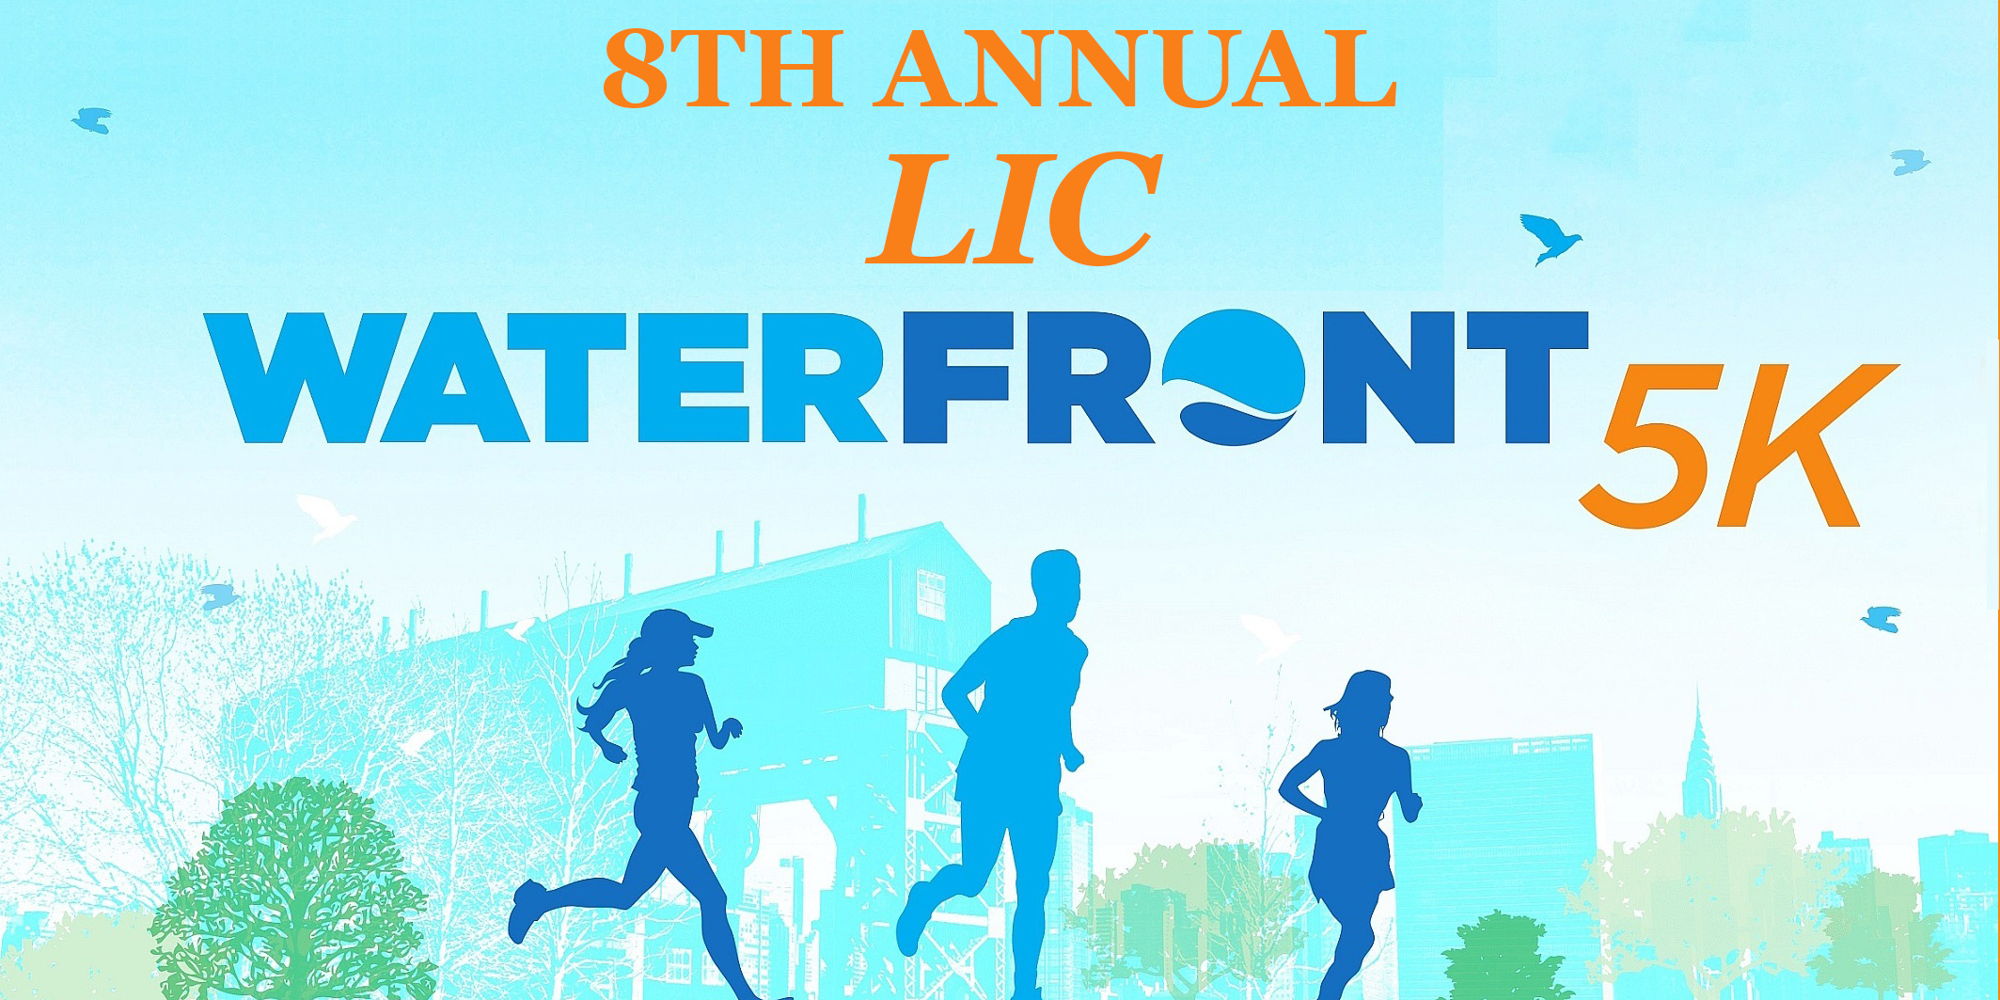 LIC Waterfront 5K Run/Walk promotional image